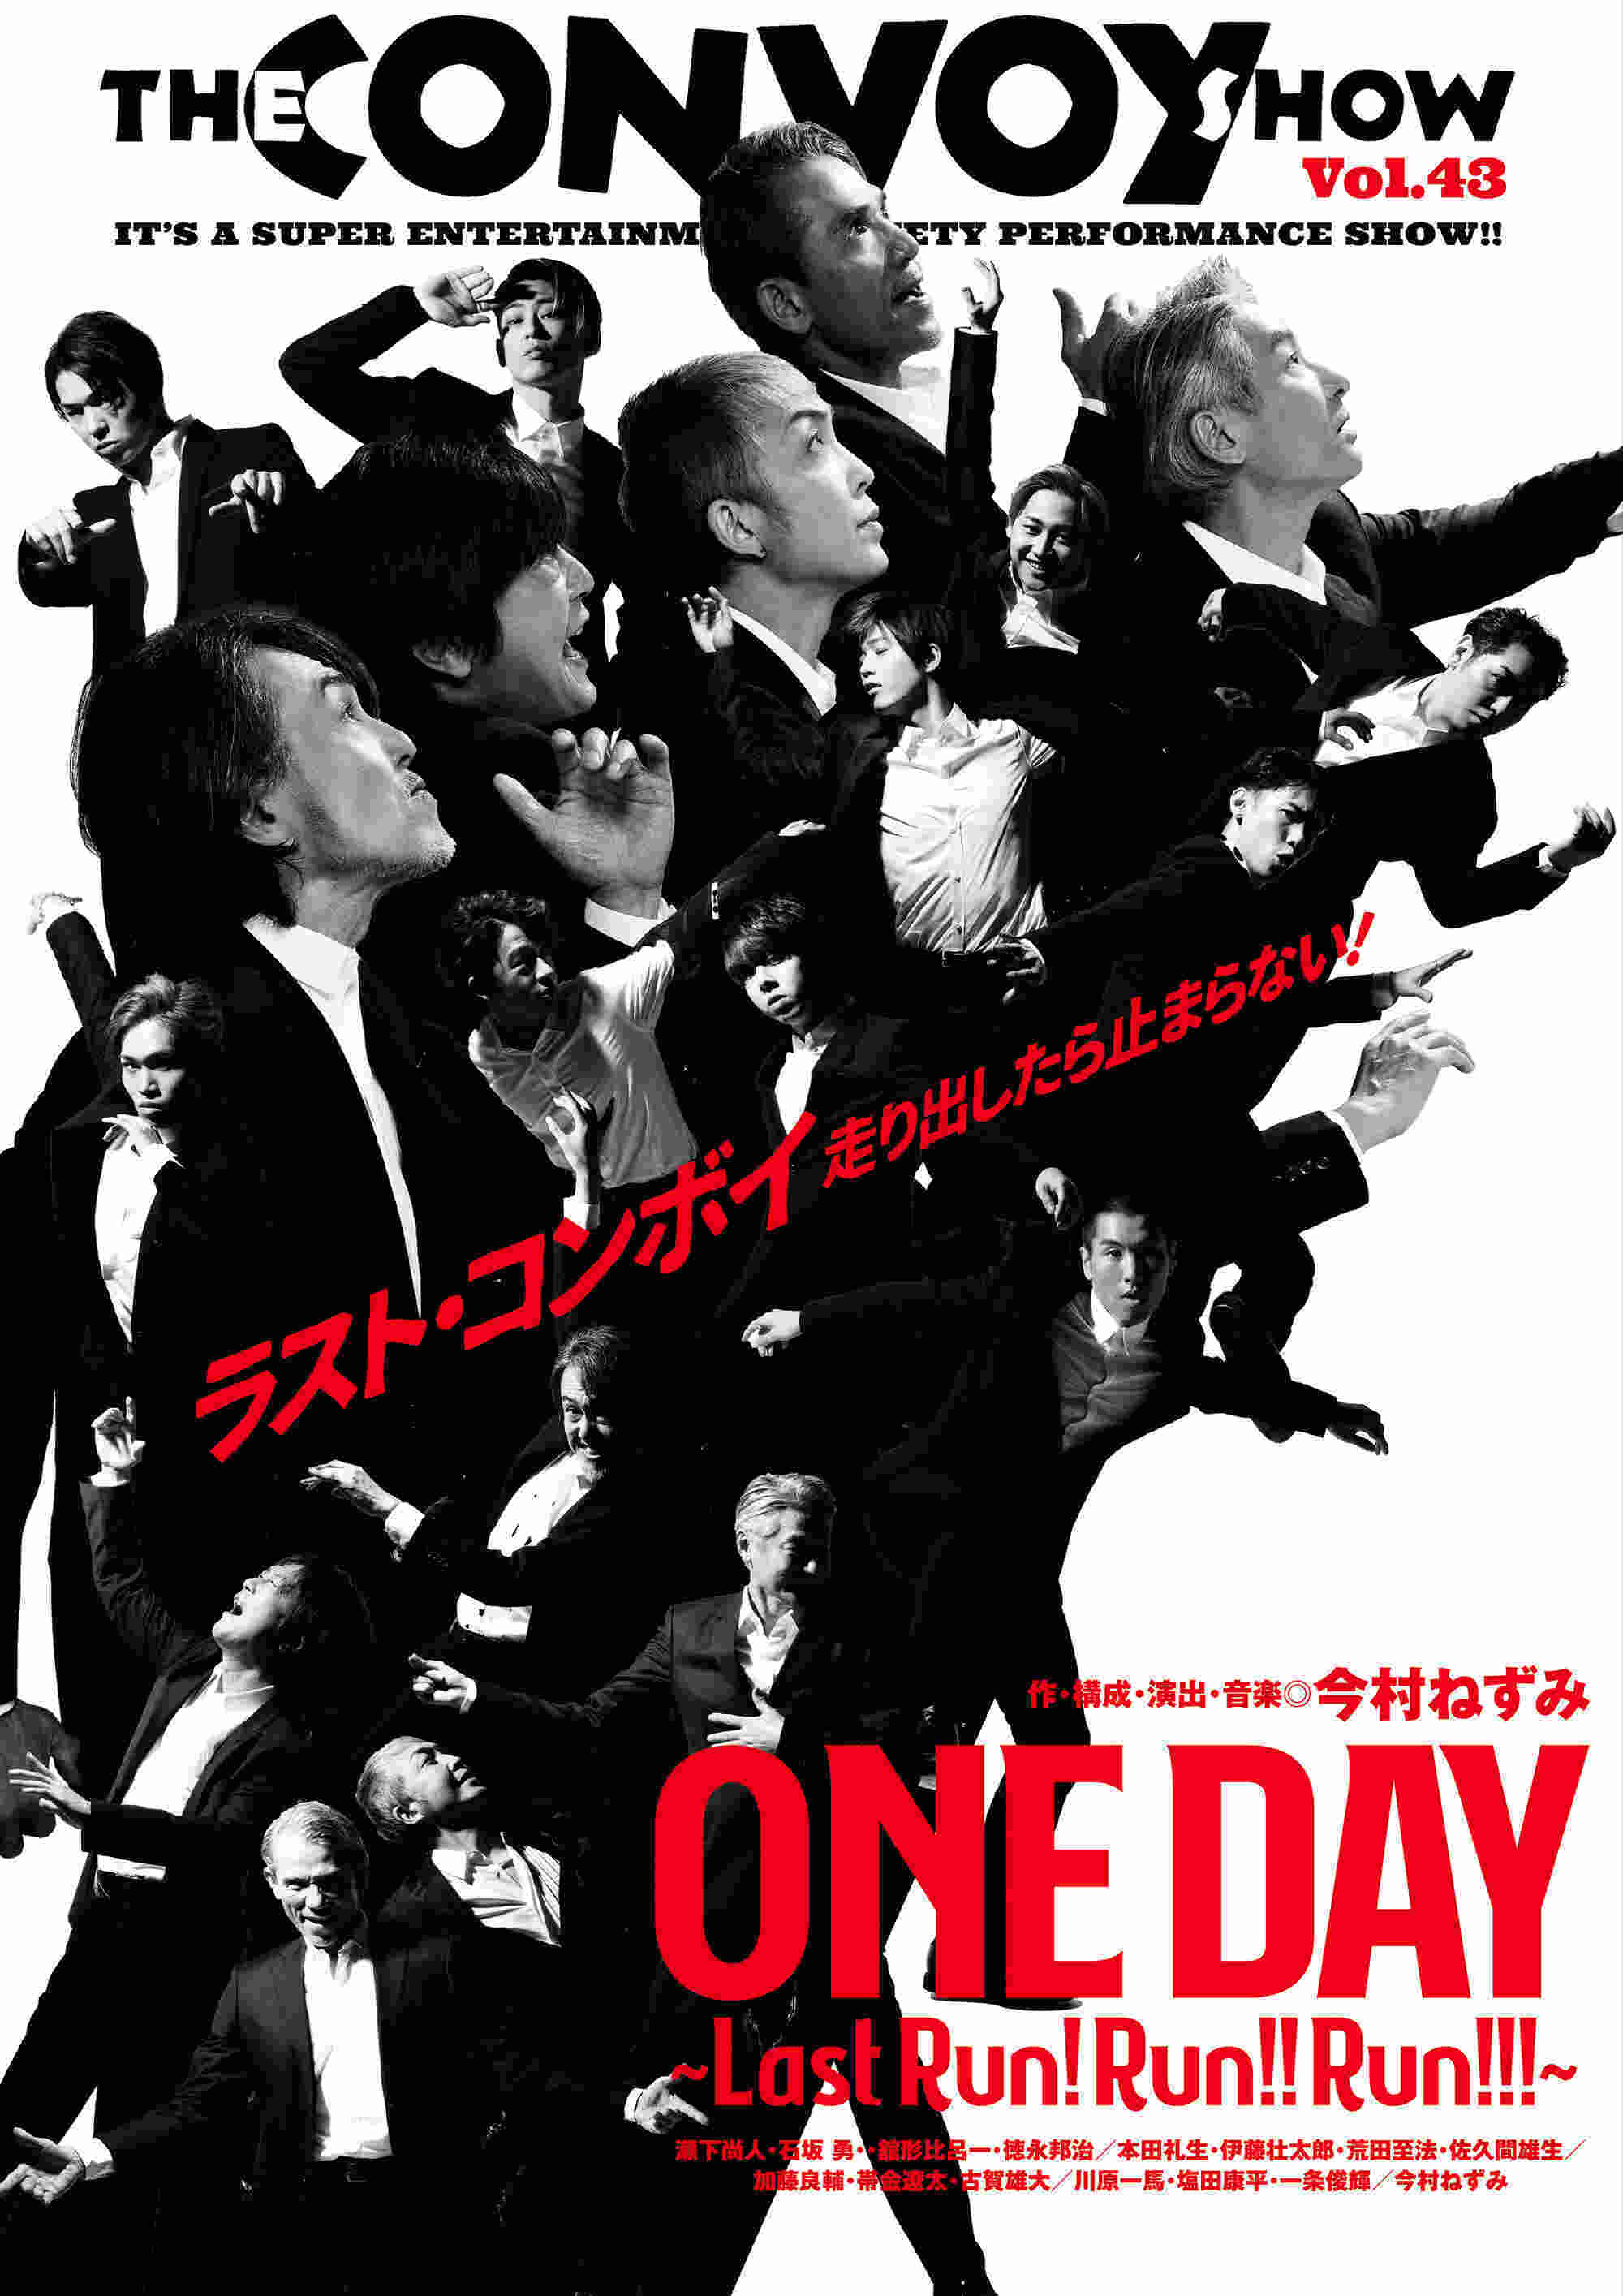 THE CONVOY SHOW vol.43 「ONE DAY〜Last Run! Run!! Run 